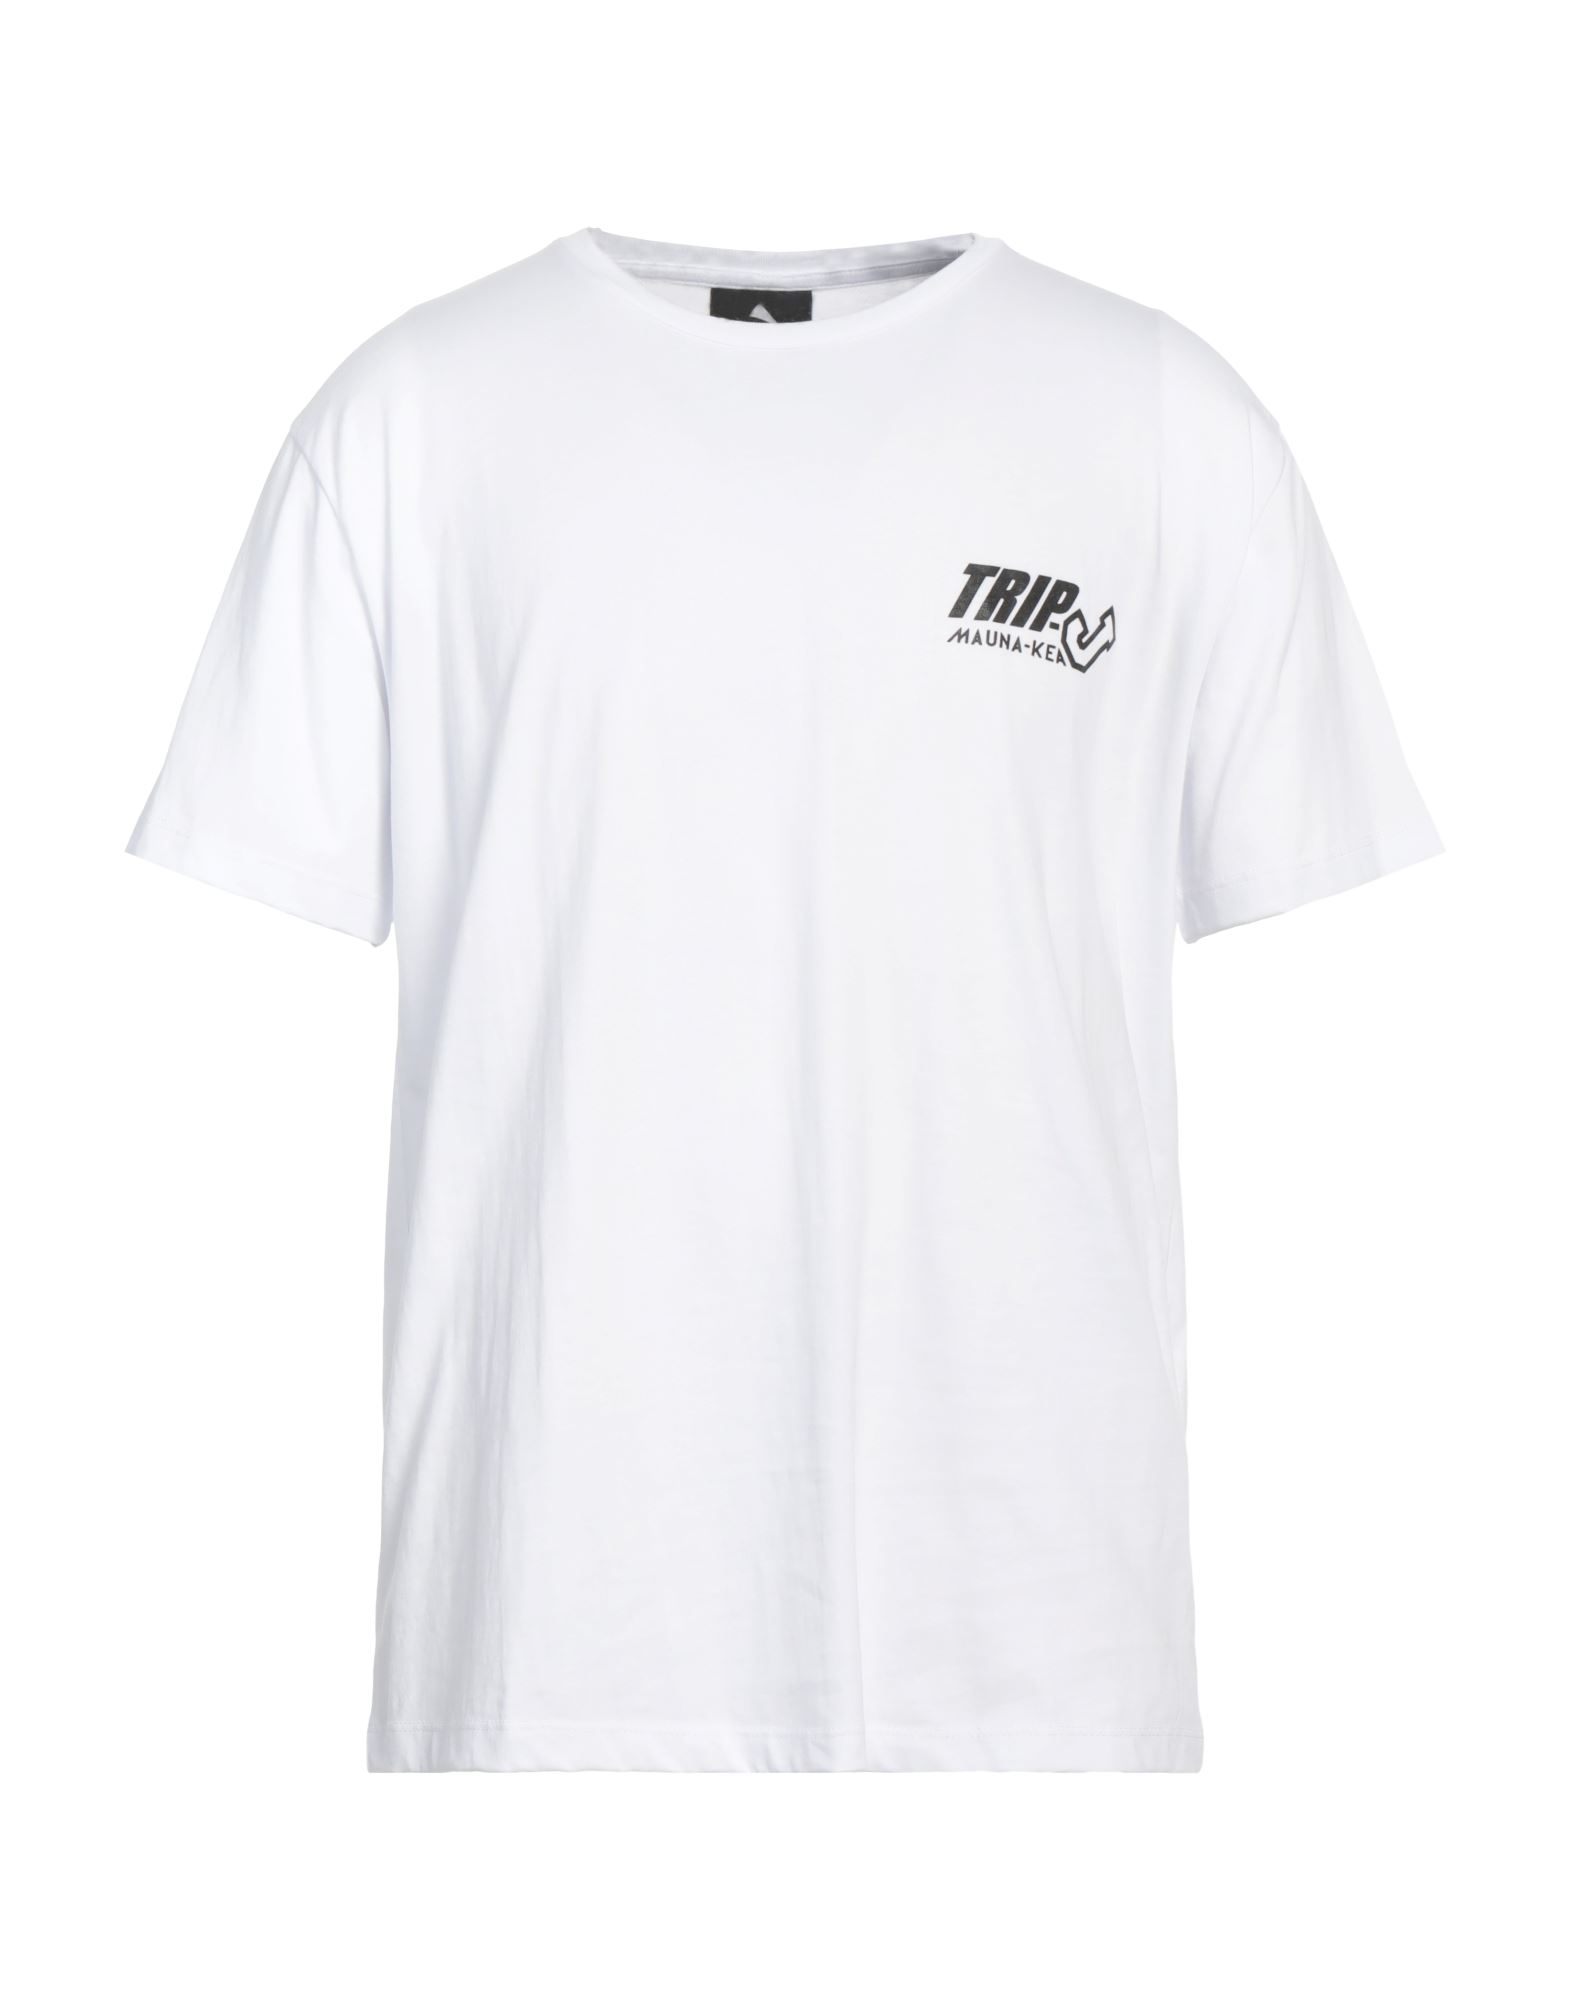 MAUNA KEA T-shirts Herren Weiß von MAUNA KEA